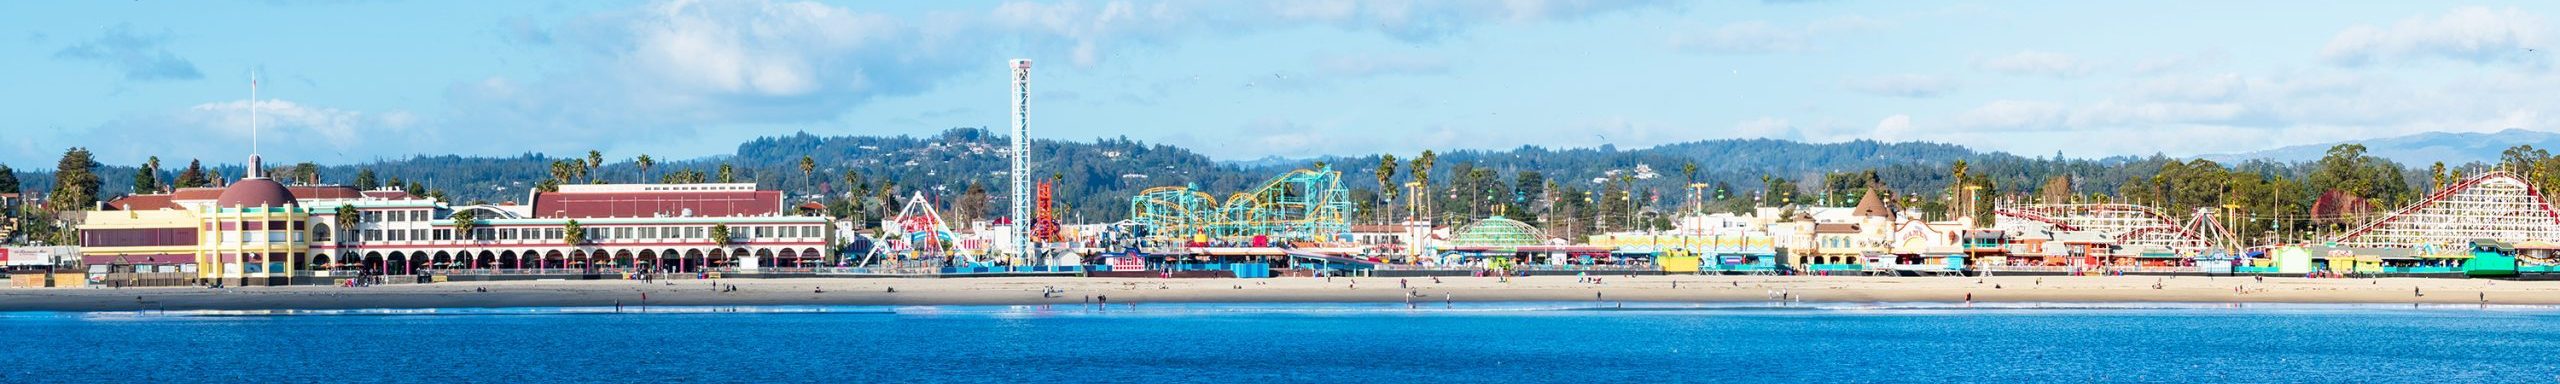 Panoramic view of the historic beach boardwalk with amusement park in Santa Cruz.